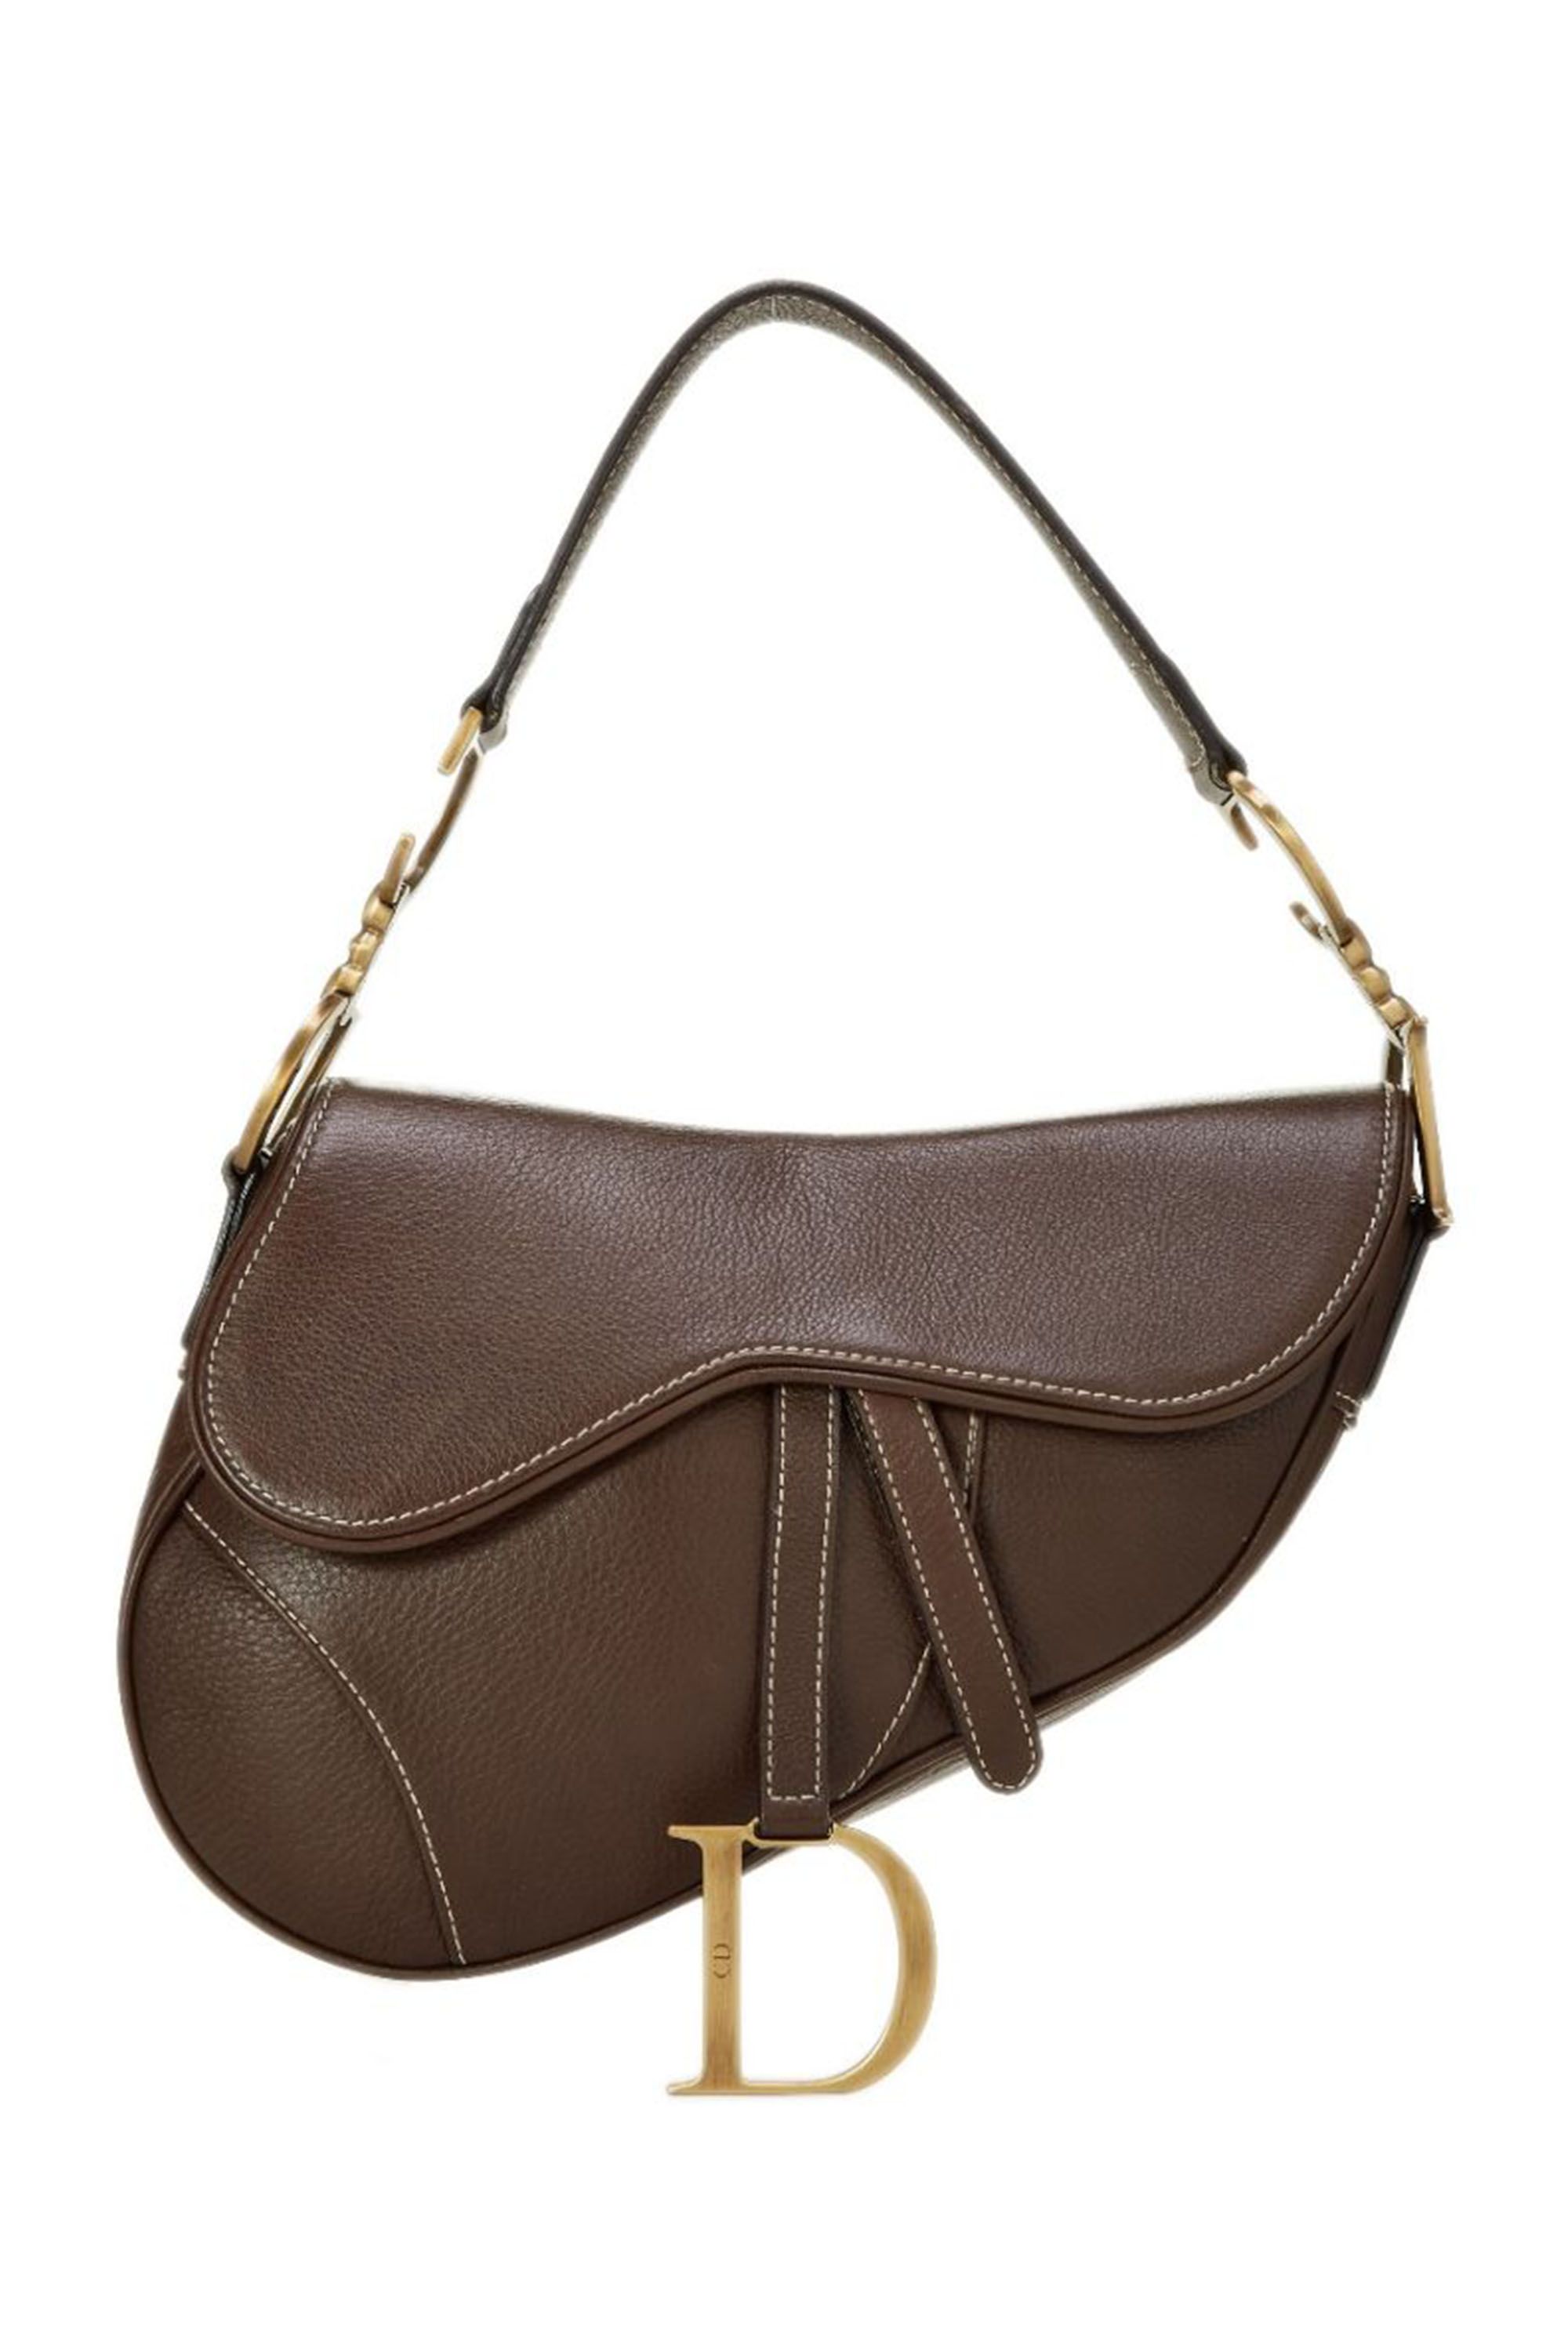 The Dior Saddle Bag Is Back  Fashion, Dior saddle bag, Fashion beauty